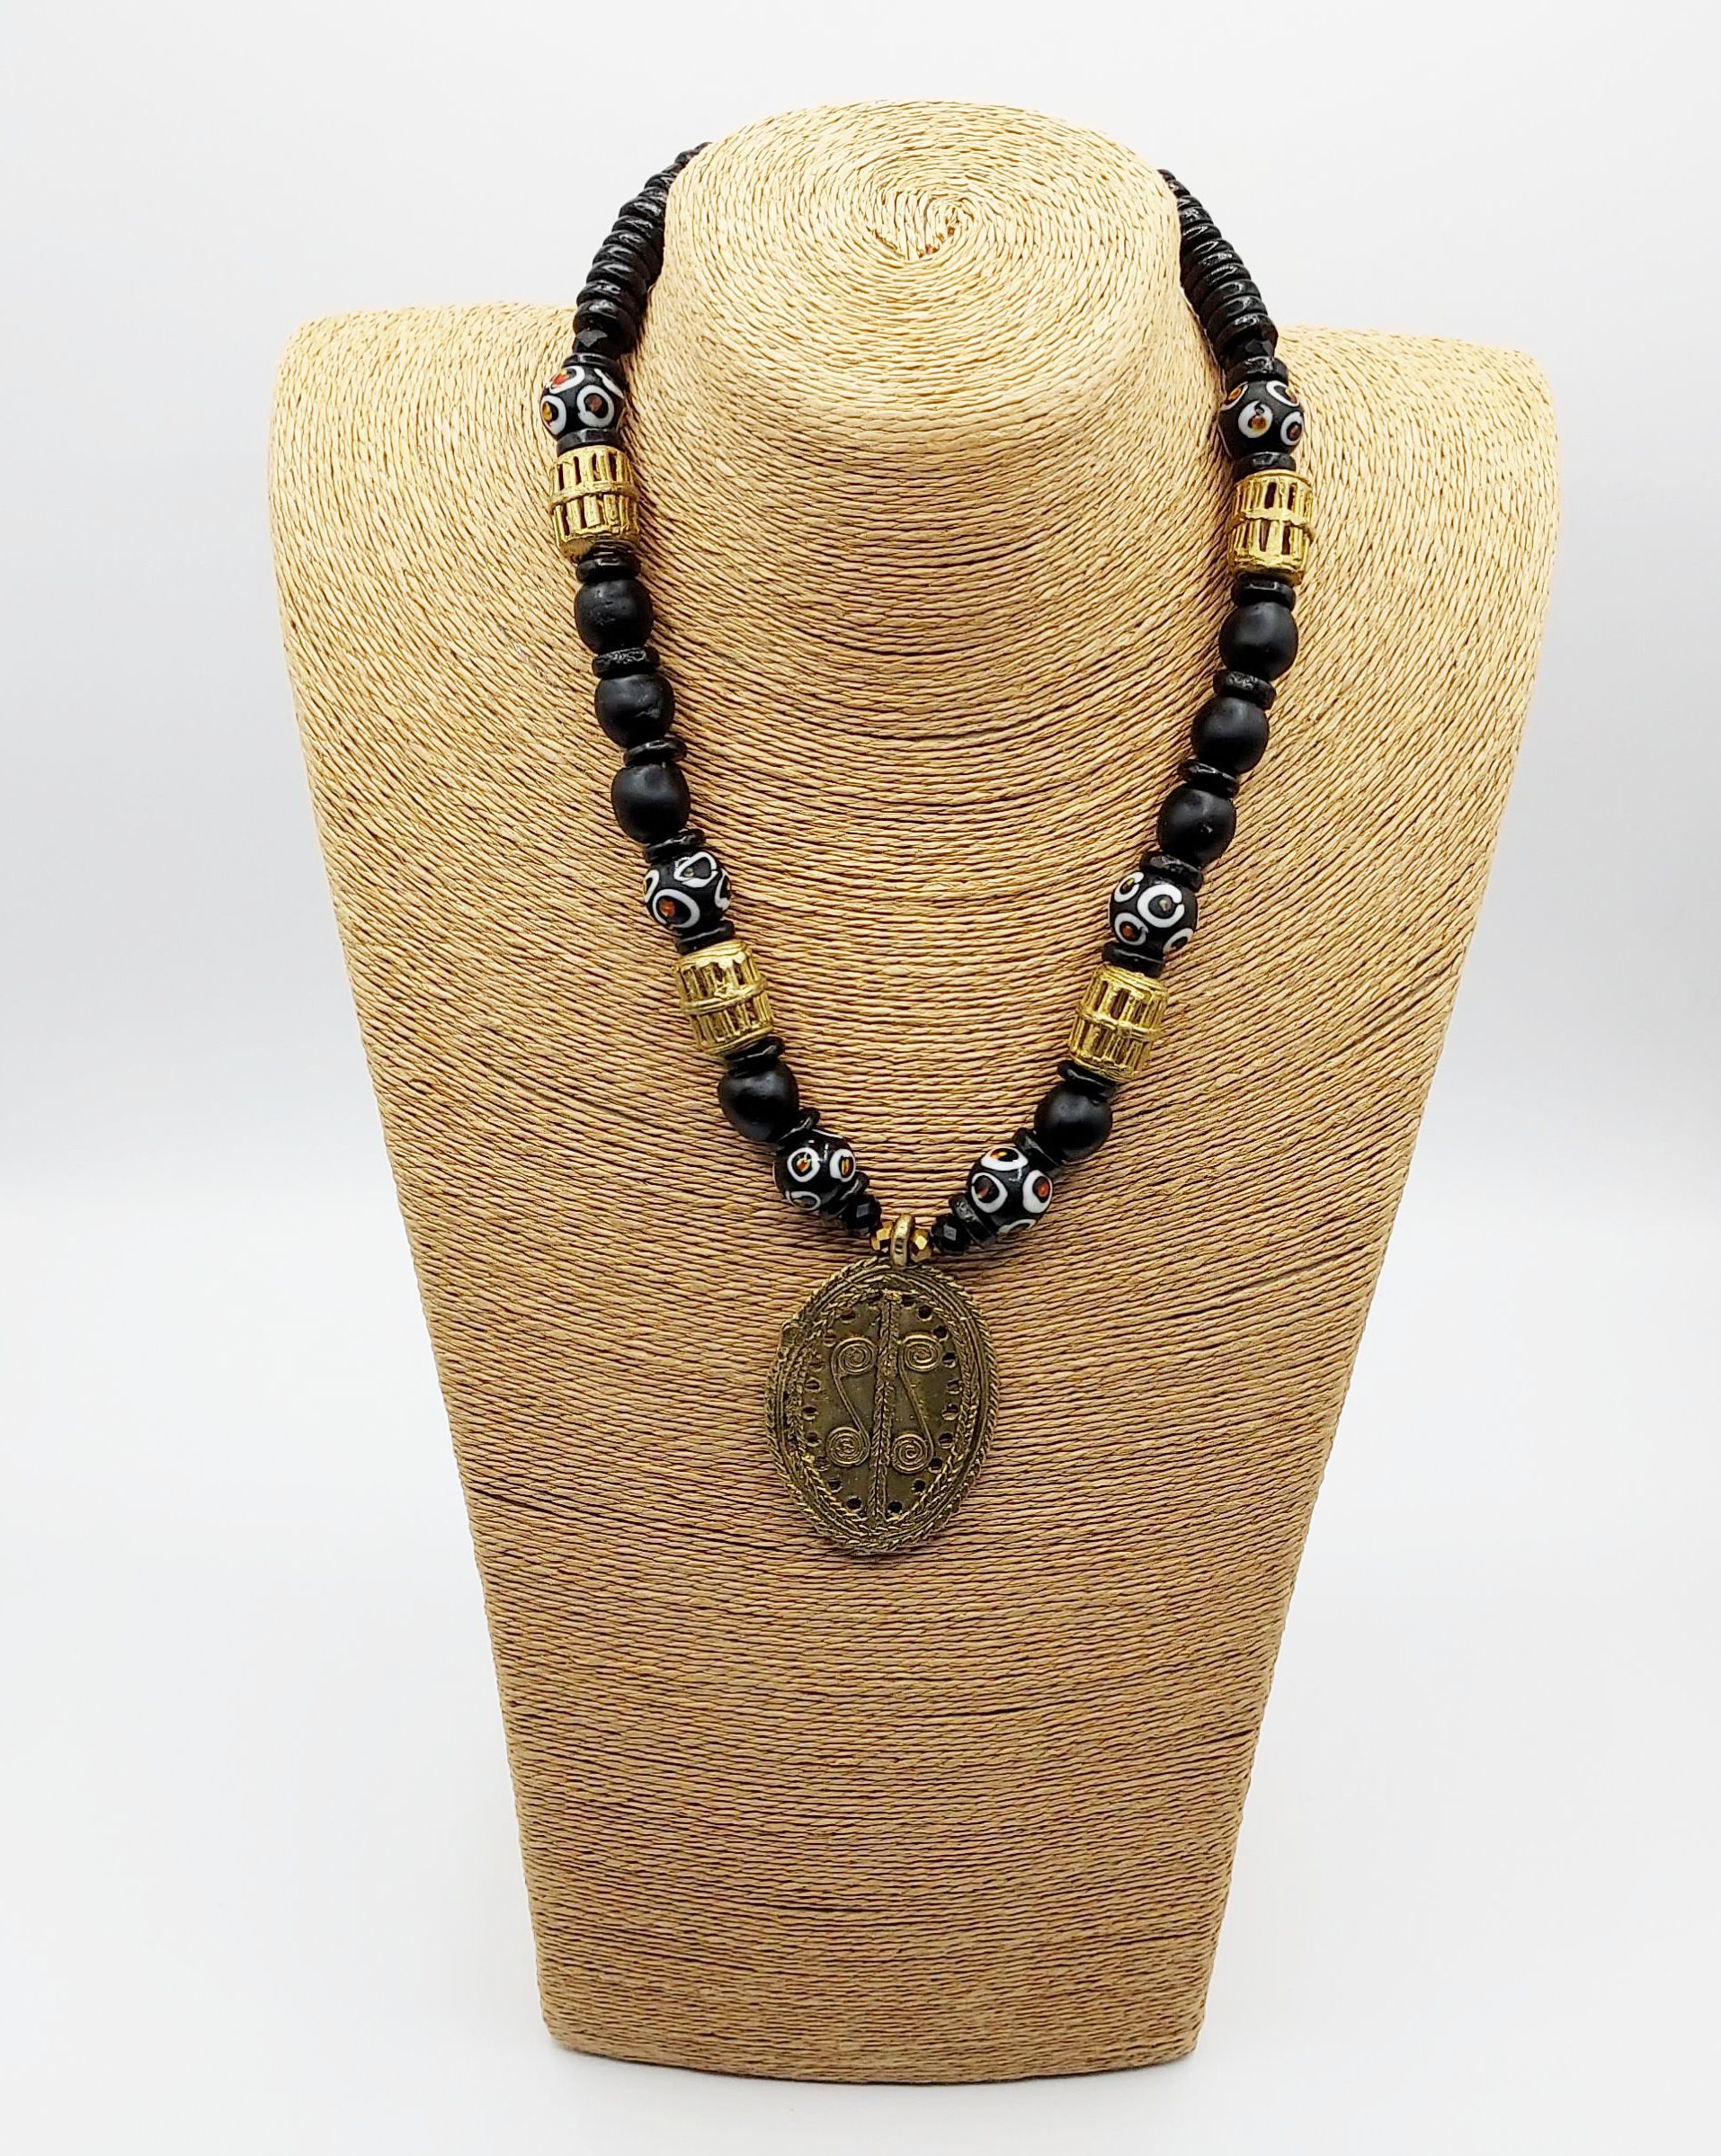 Ashanti Glass Beads Handmade Necklace